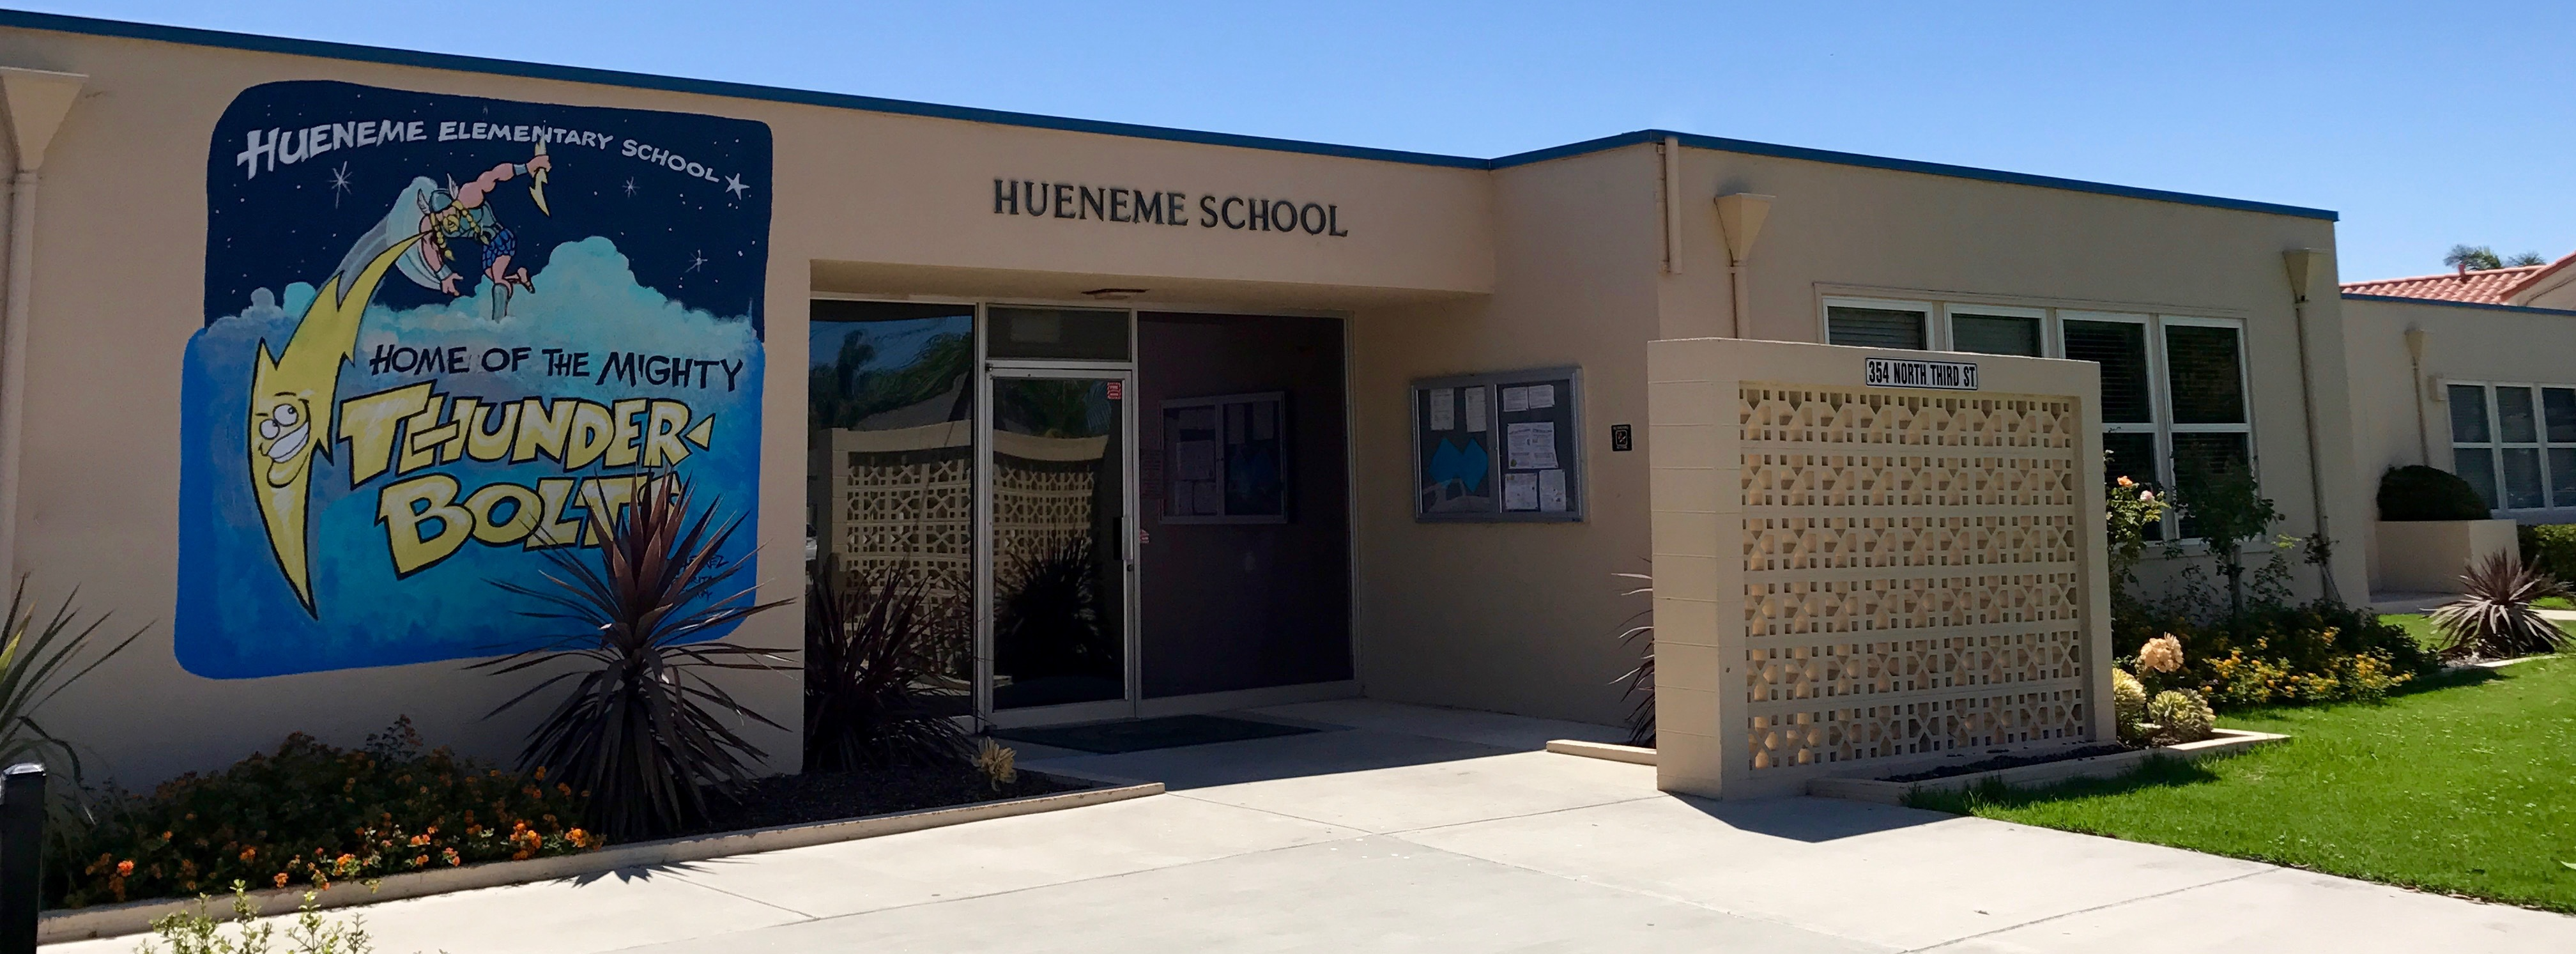 Hueneme Elementary School campus